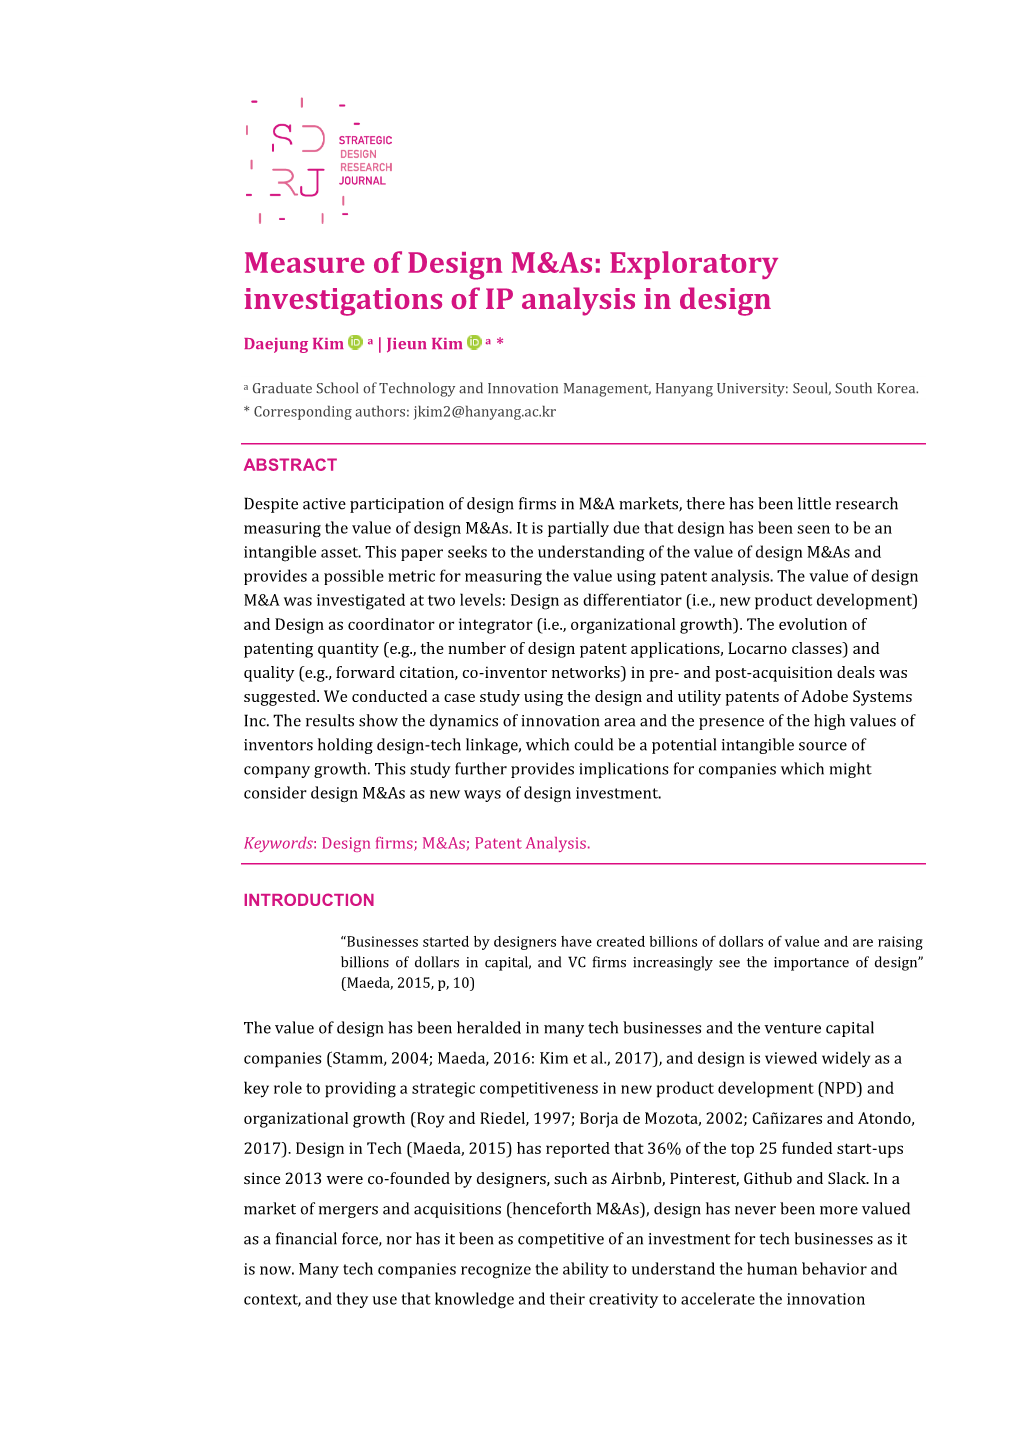 Measure of Design M&As: Exploratory Investigations of IP Analysis in Design